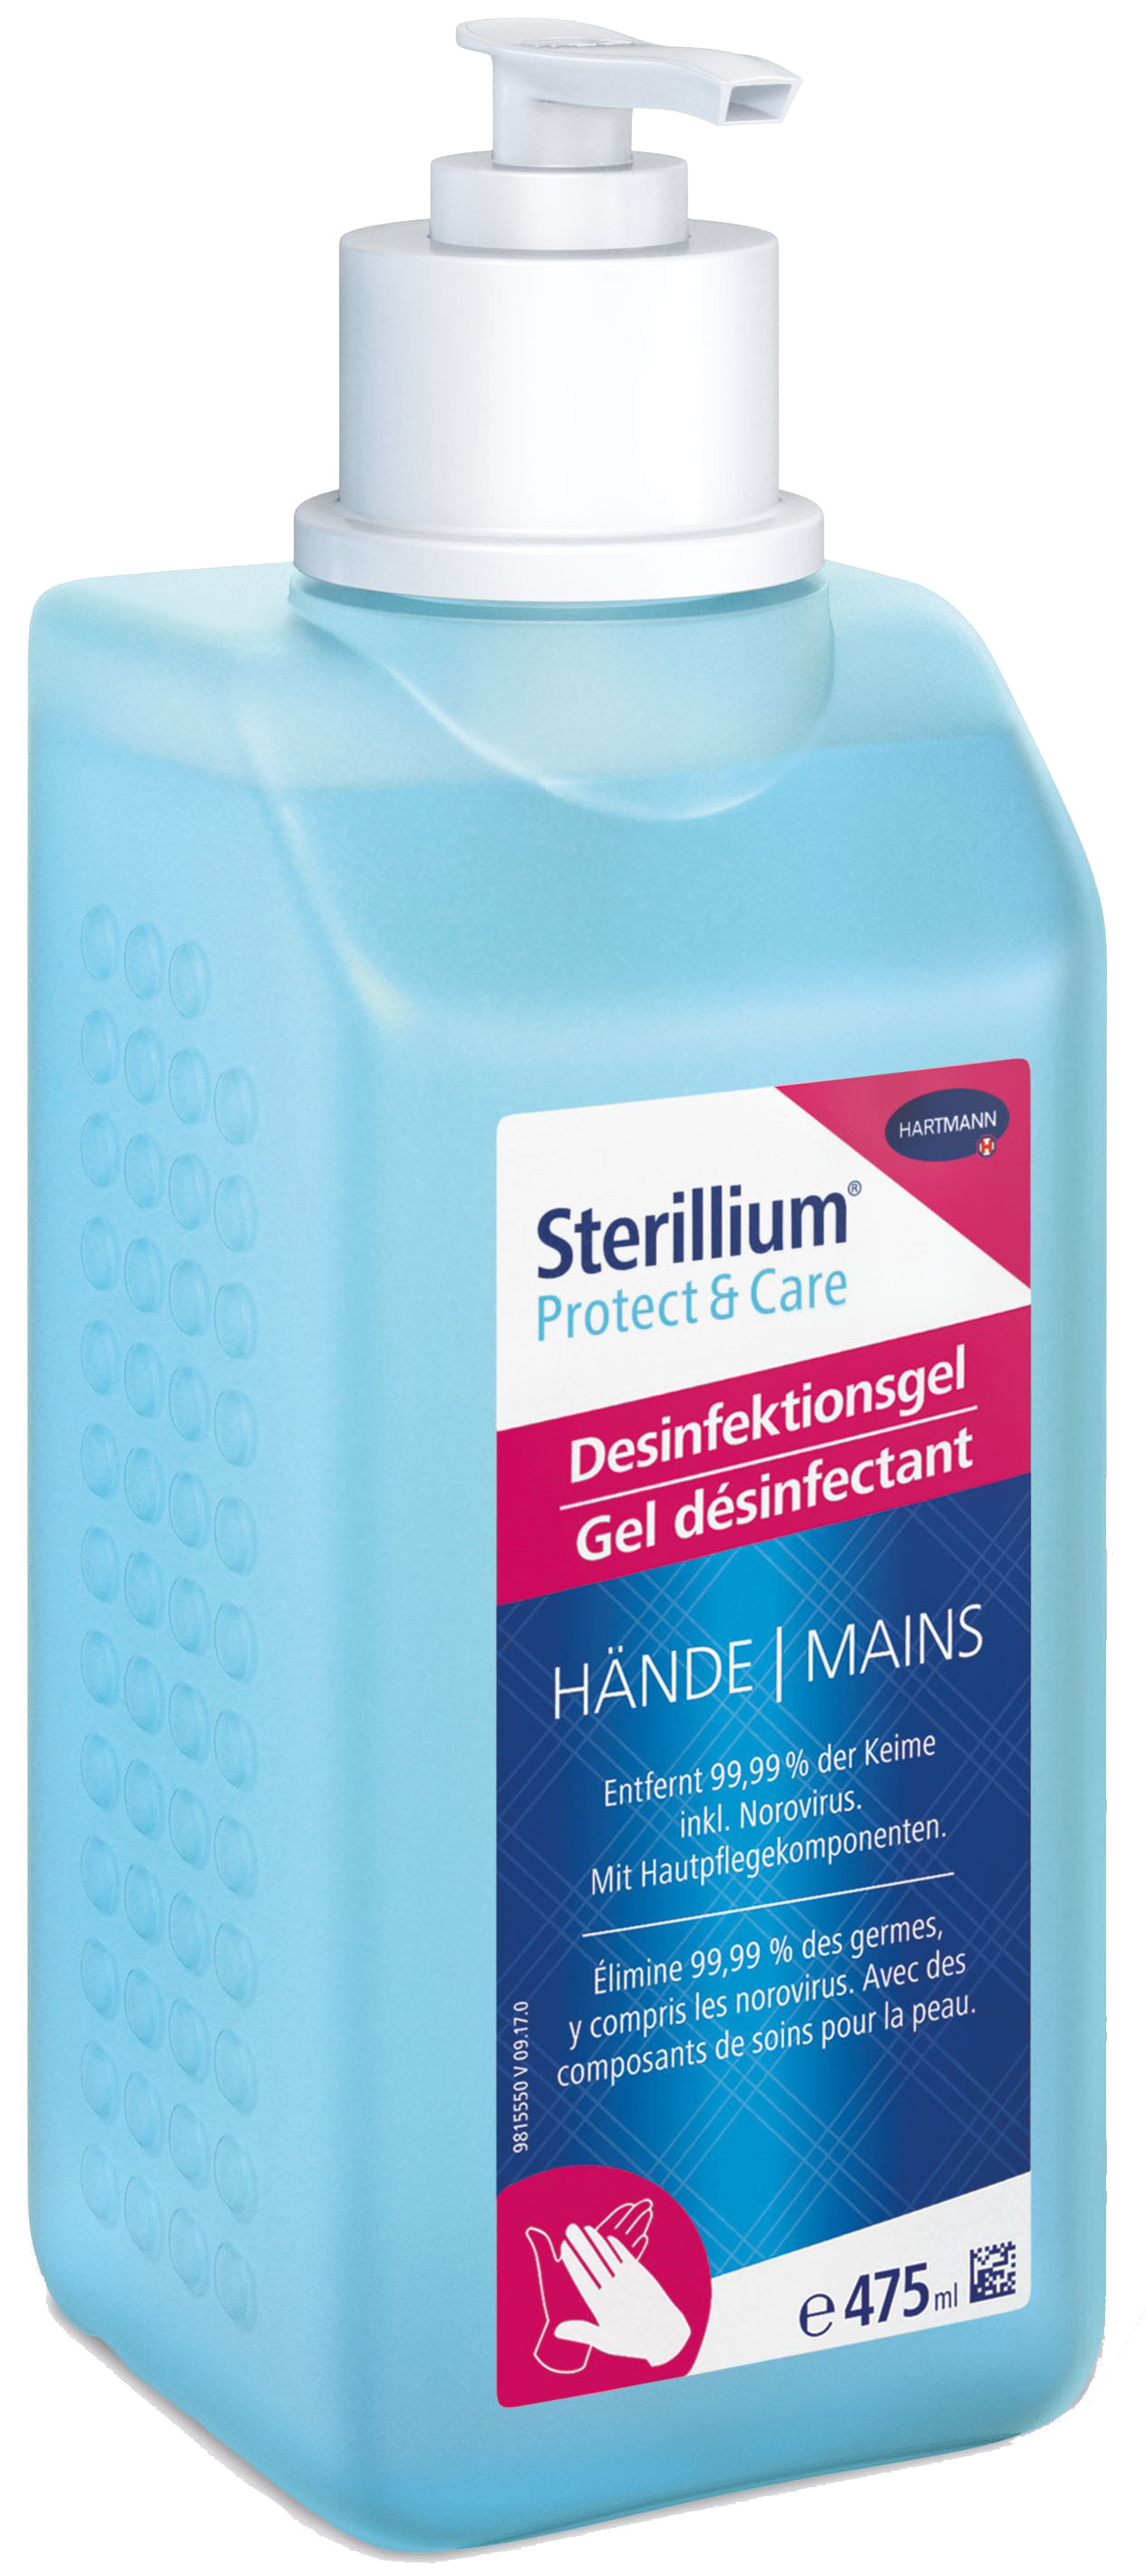 HARTMANN Desinfektionsmittel Sterilium 981613 Protect&Care, 475ml